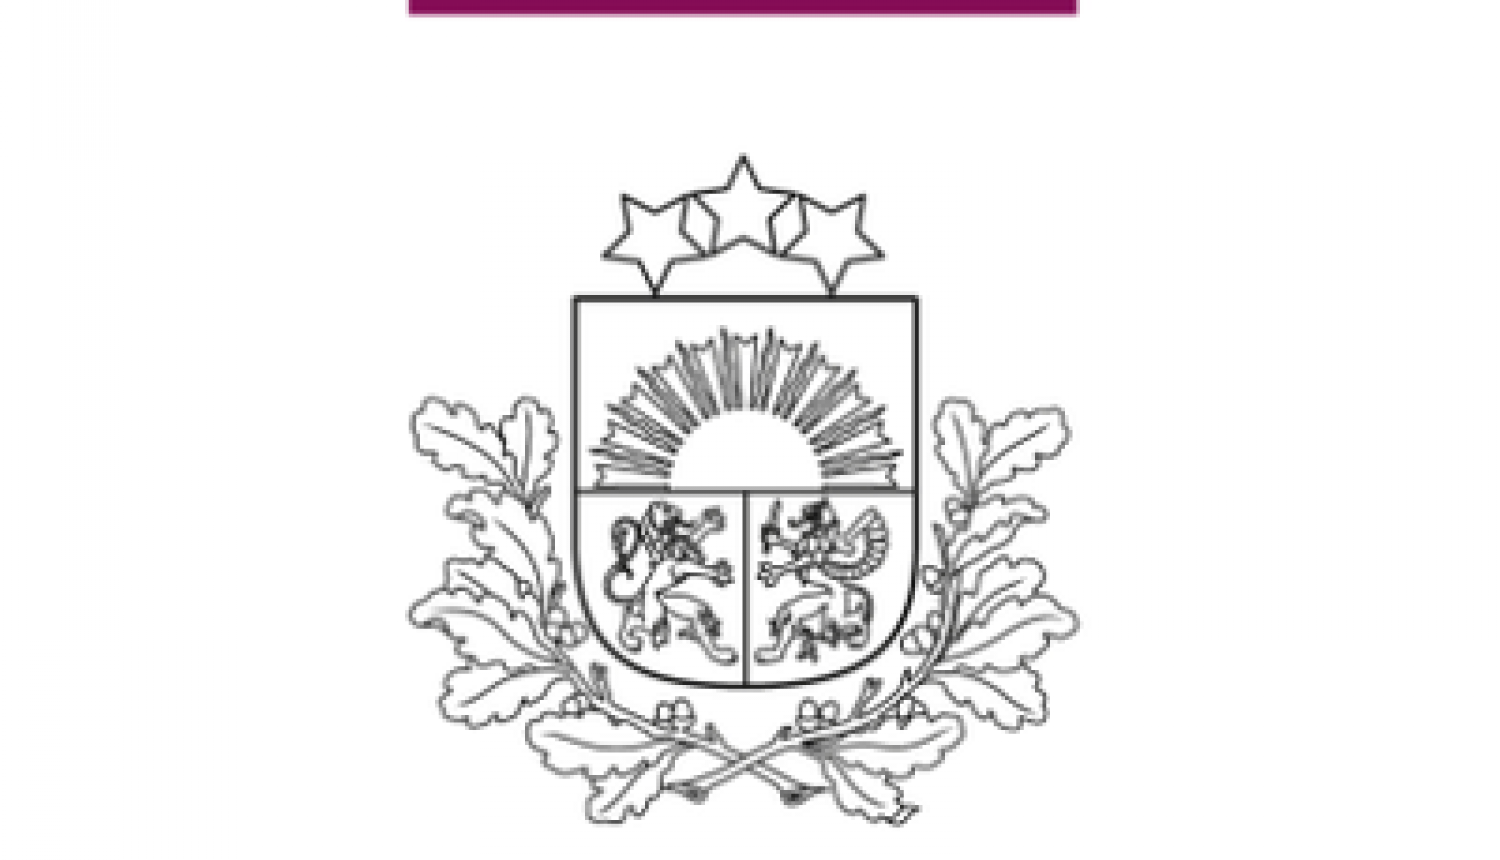 VVC logo